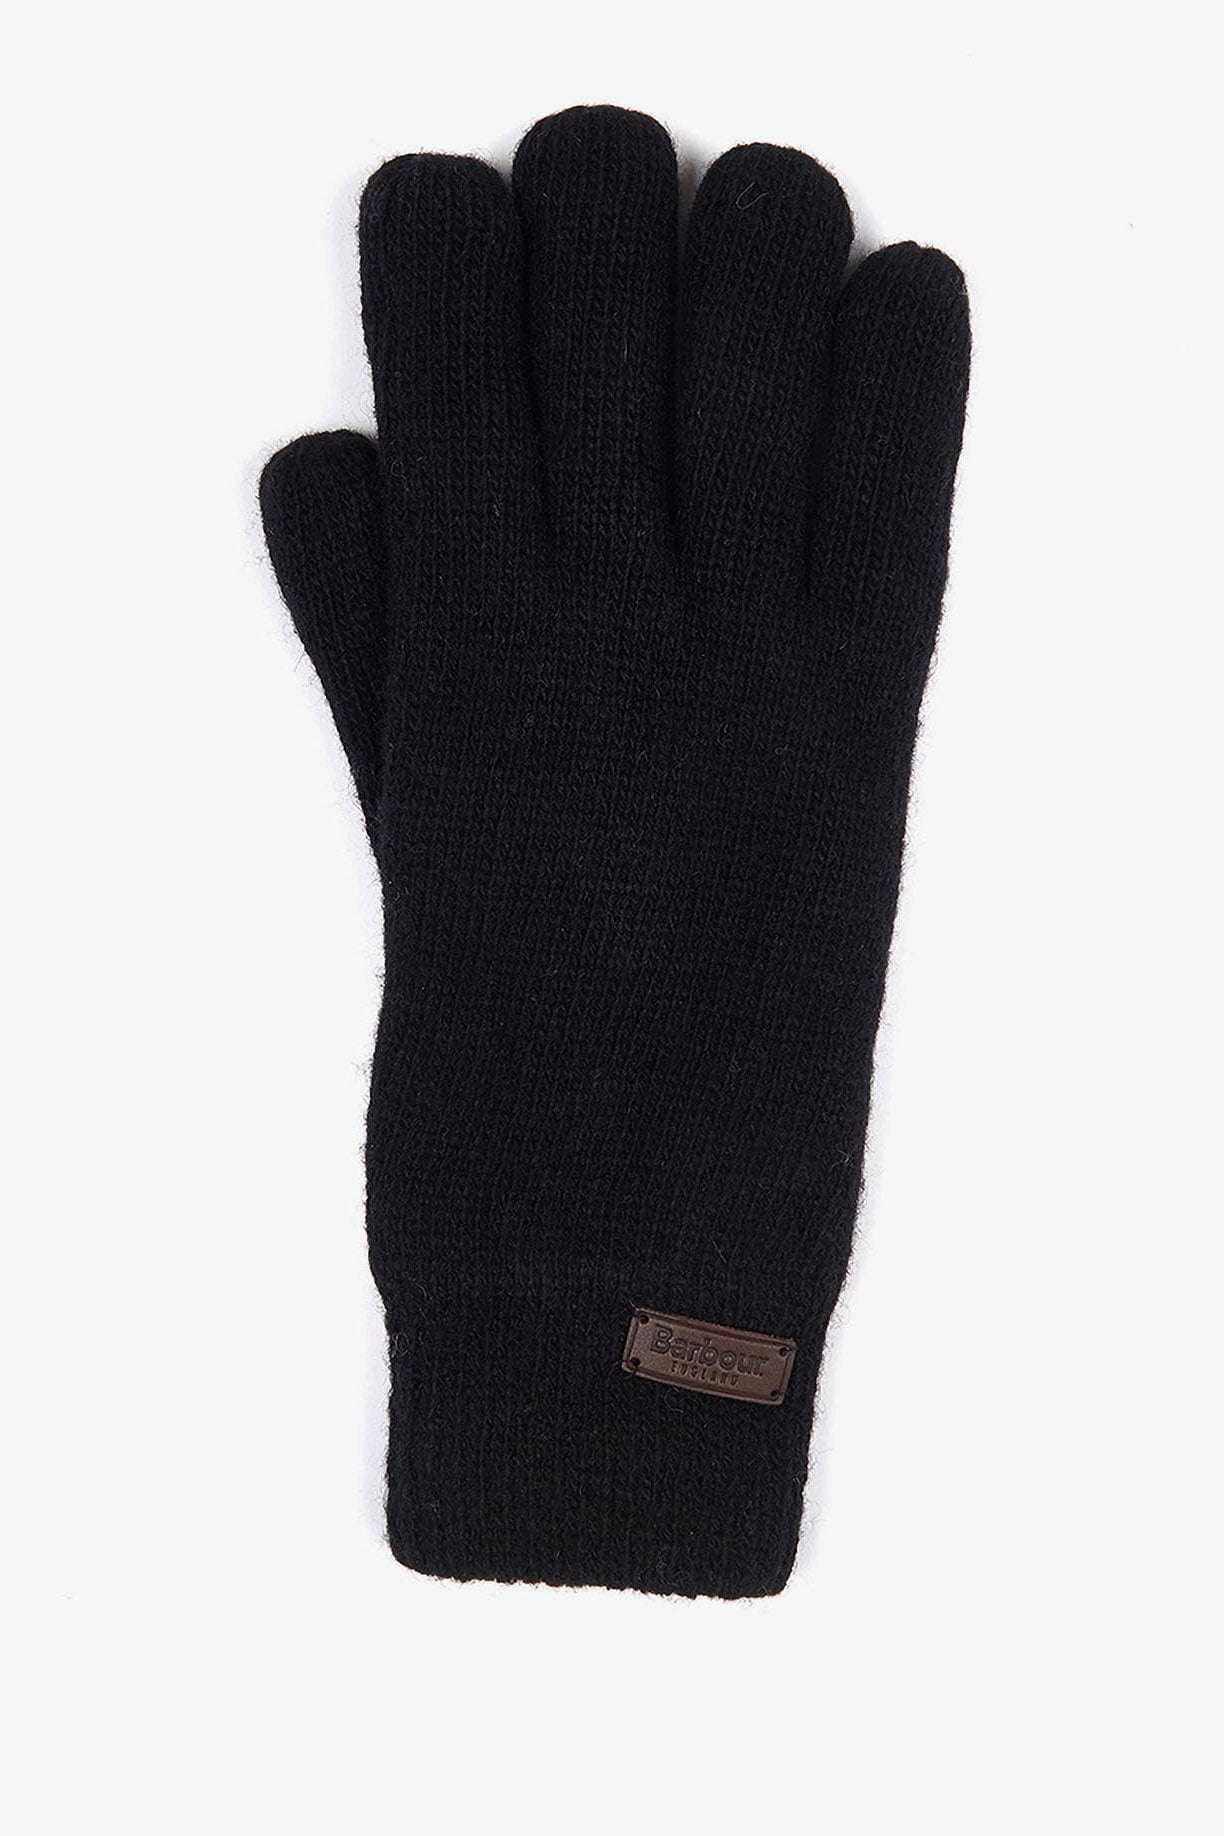 Barbour Carlton Gloves - Black MGL0065_BK11_OS